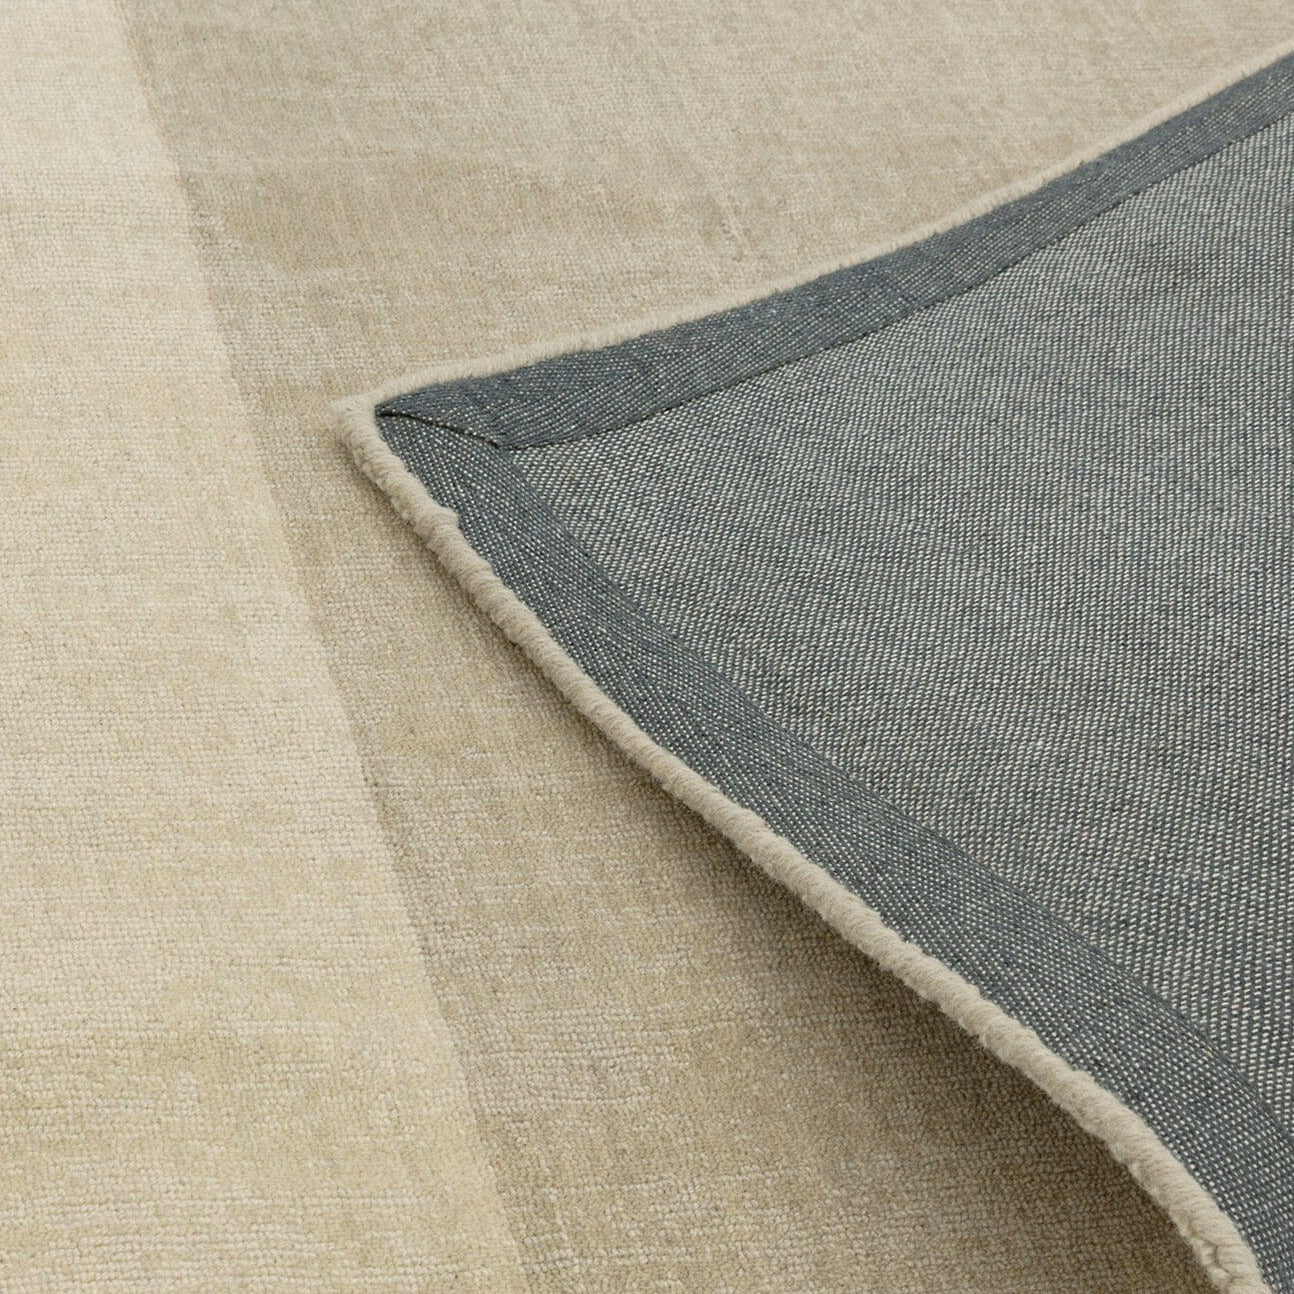 Asiatic Carpets Blox Hand Woven Rug Copper - 200 x 300cm